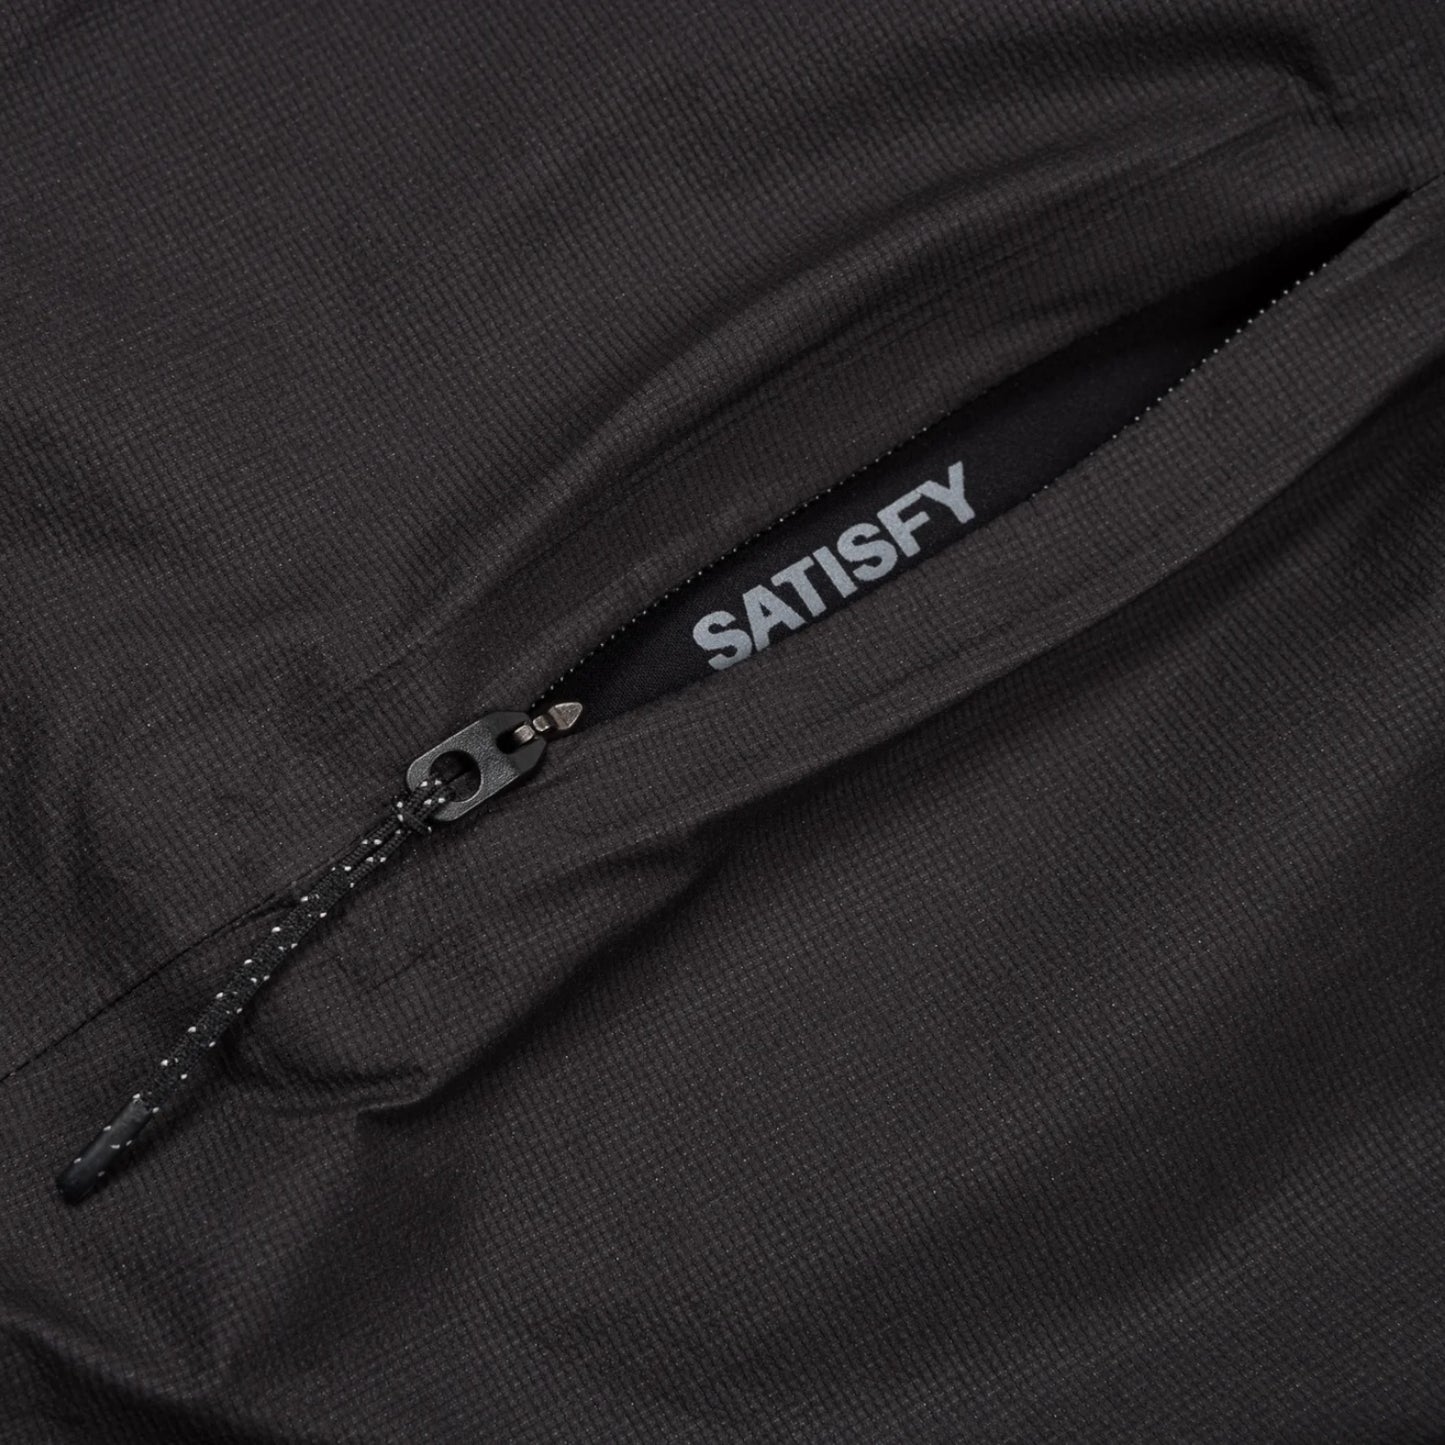 Satisfy - Pertex® 3L Fly Rain Jacket (Black)